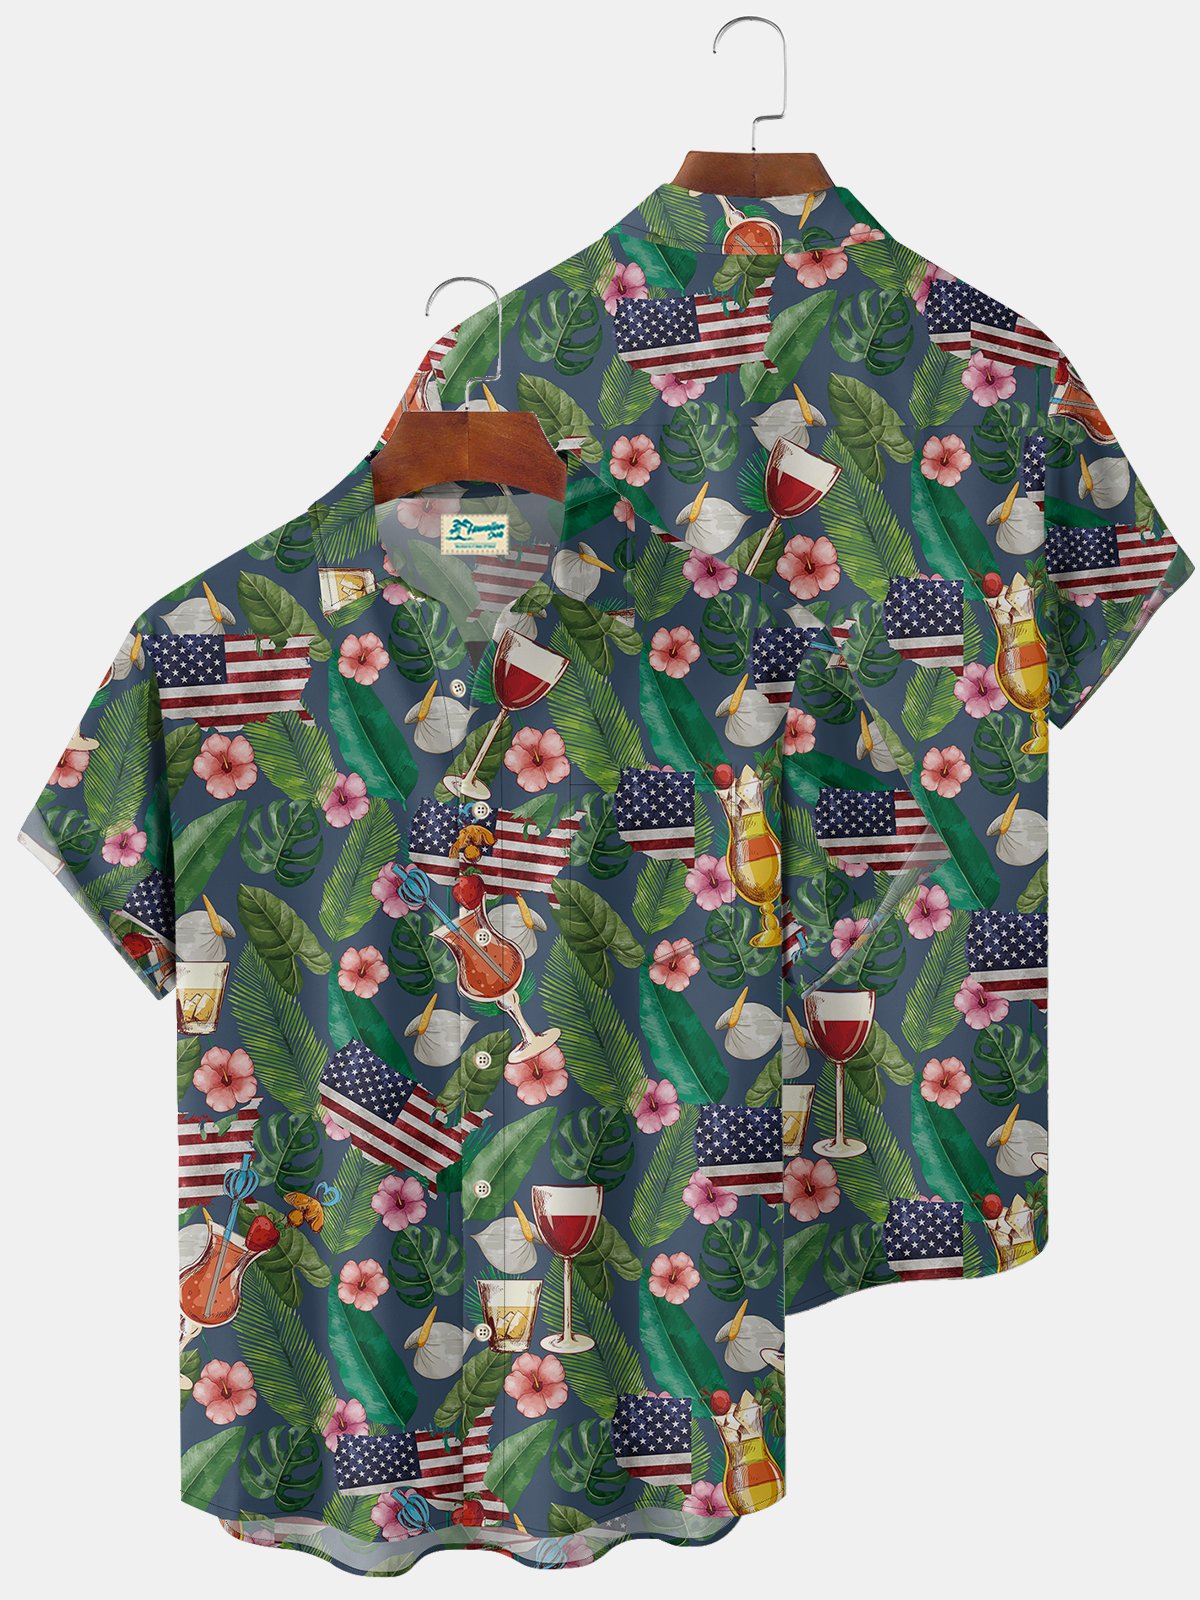 Royaura Beach Holiday Green Men's Hawaiian Shirts American Flag Stretch Plus Size Aloha Camp Pocket Shirts